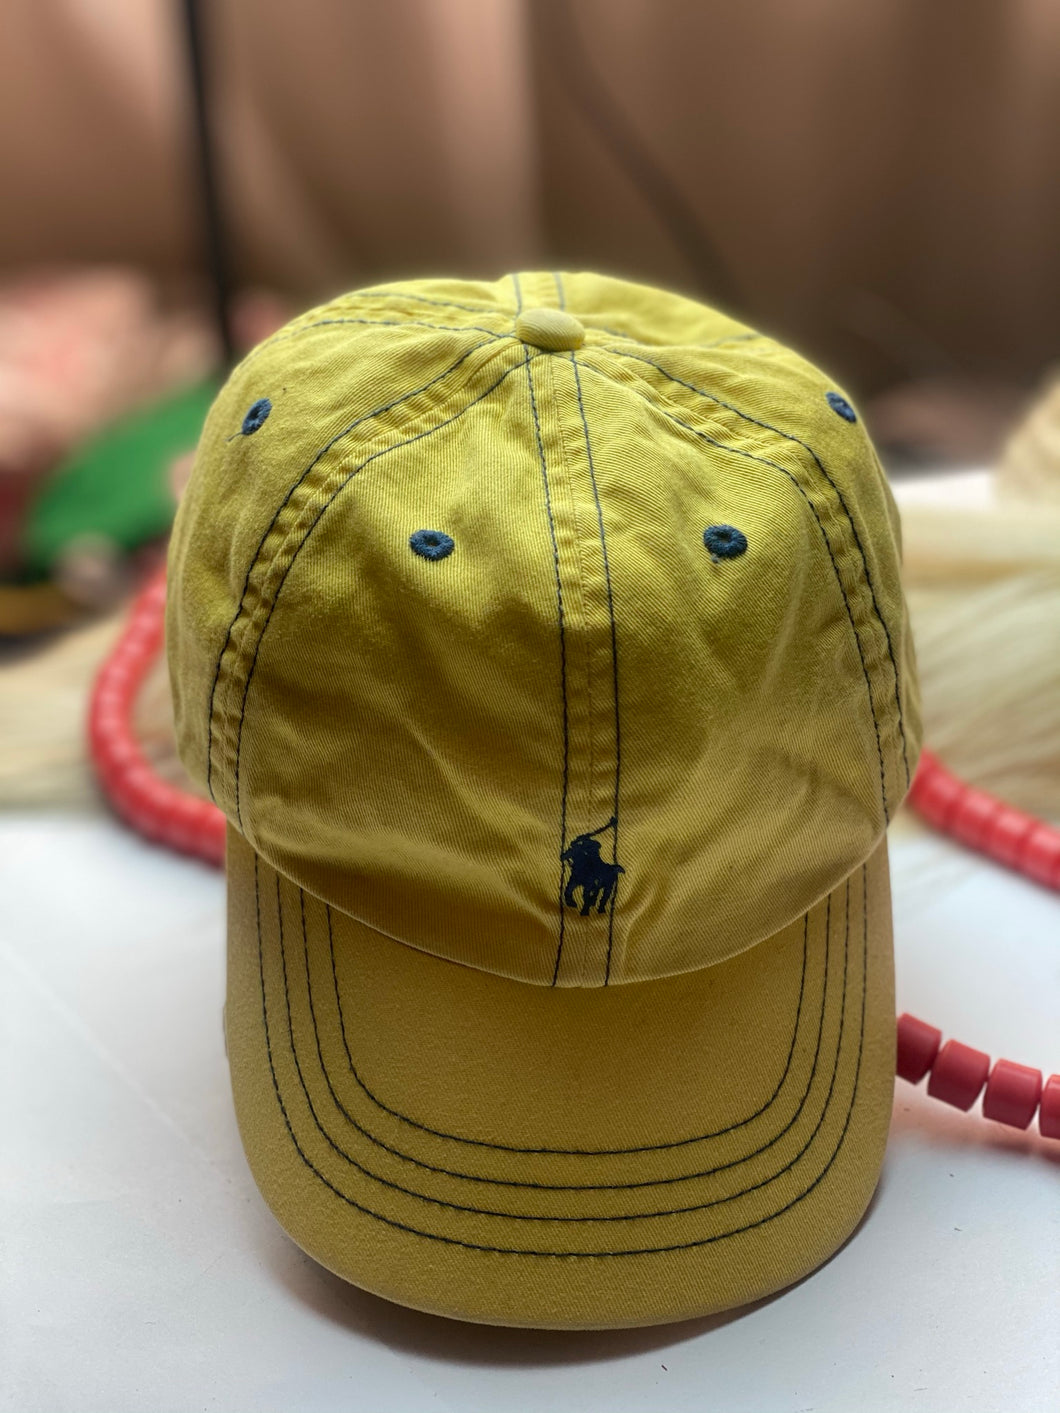 Ralph Lauren Face Cap - Yellow color - Unisex